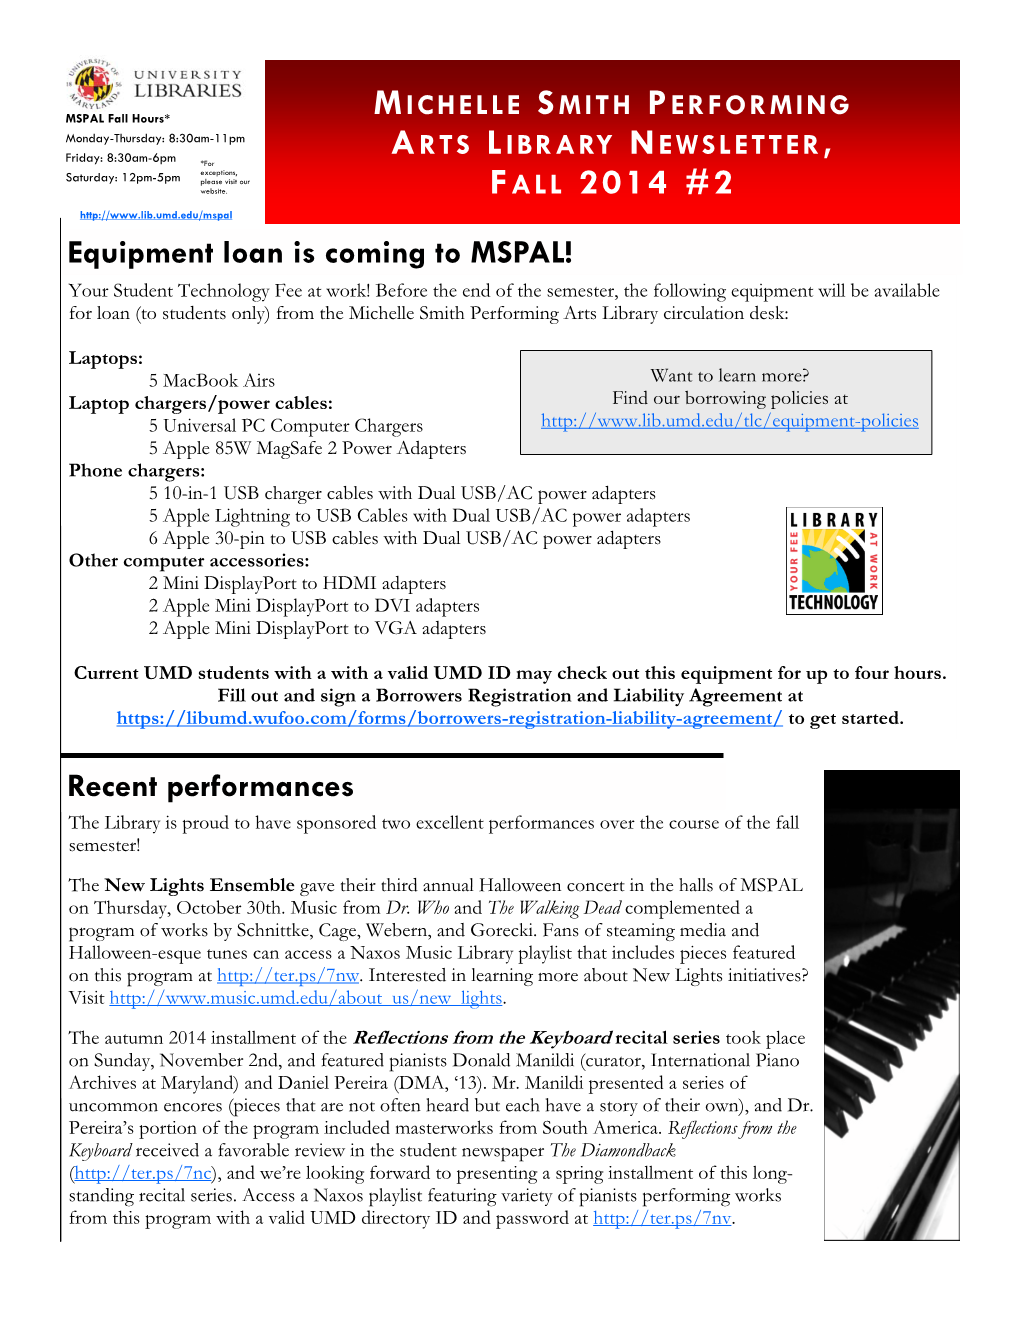 MSPAL Fall 2014 Newsletter #2